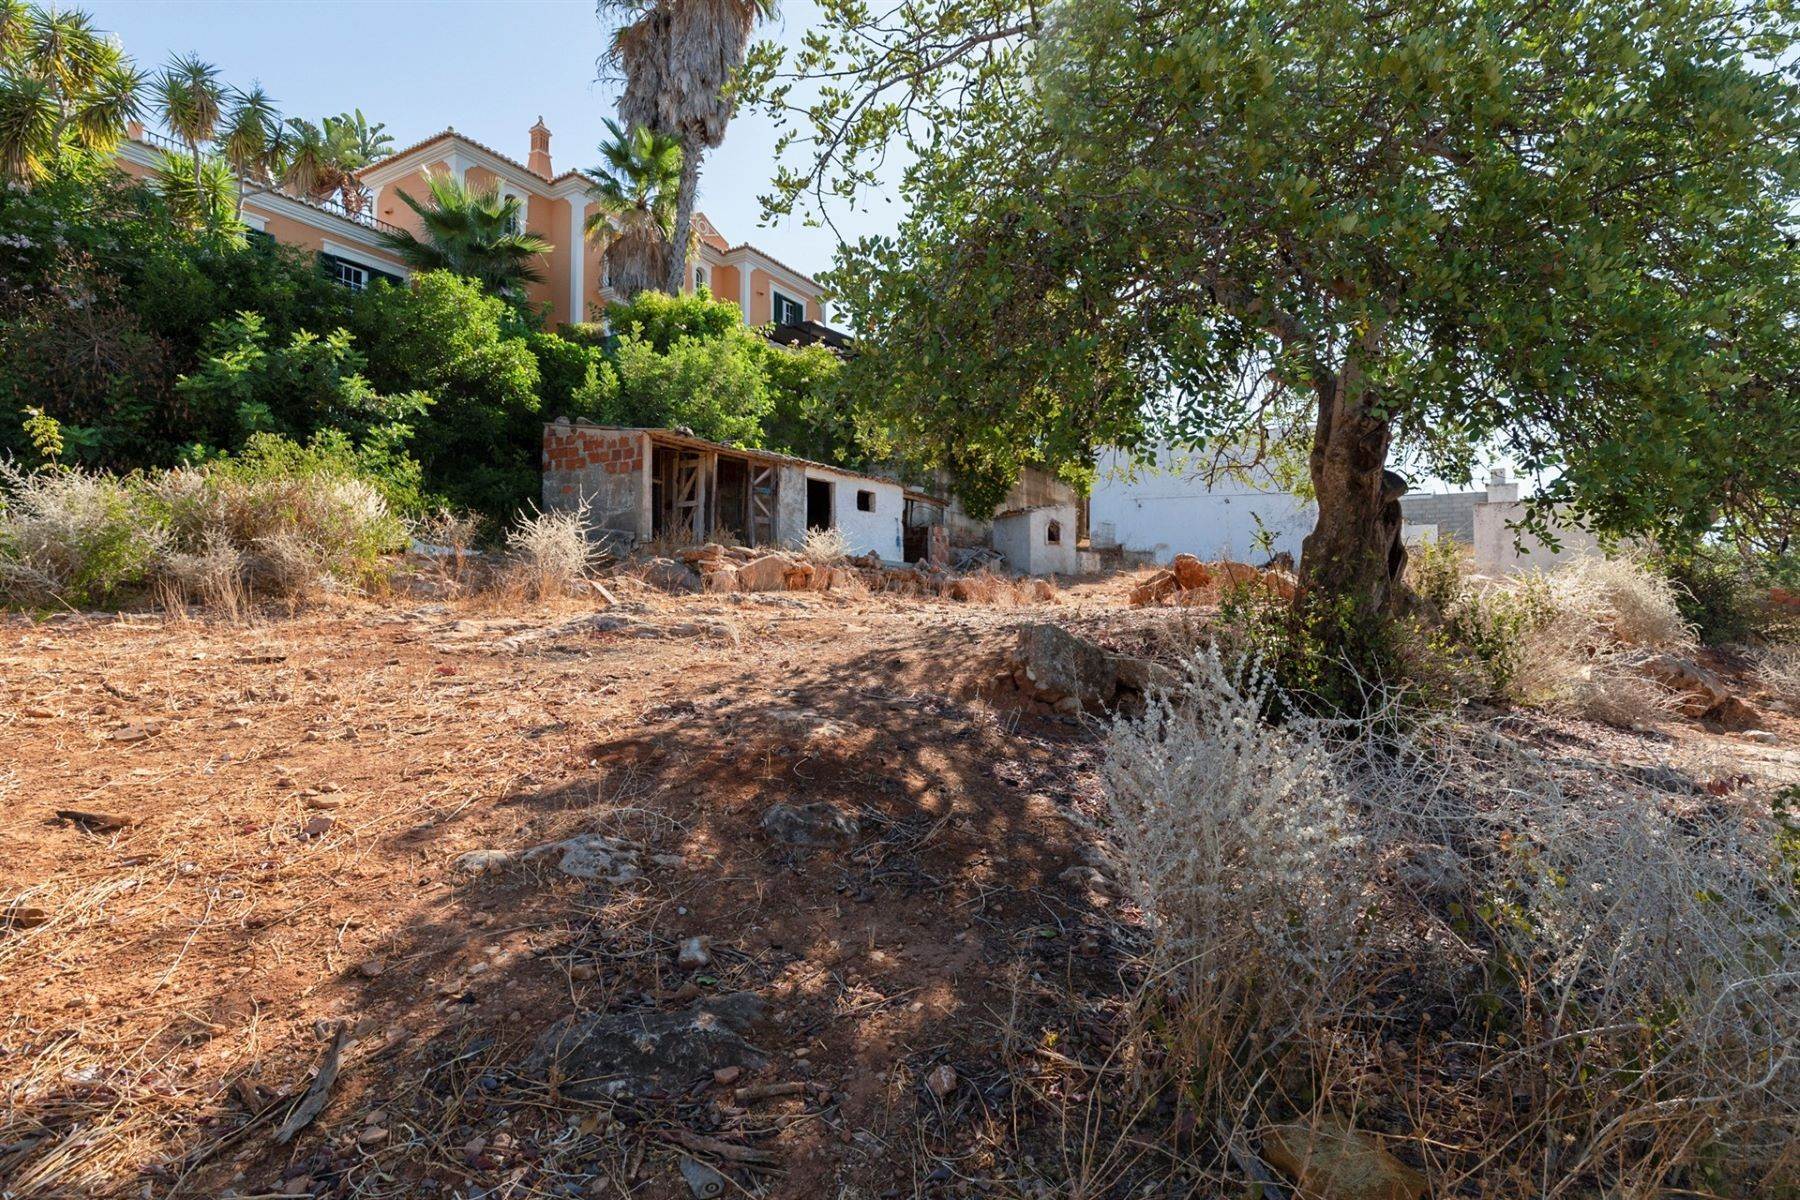 7. Land for Sale at Terreno com ruina for Sale Loule, Algarve Portugal